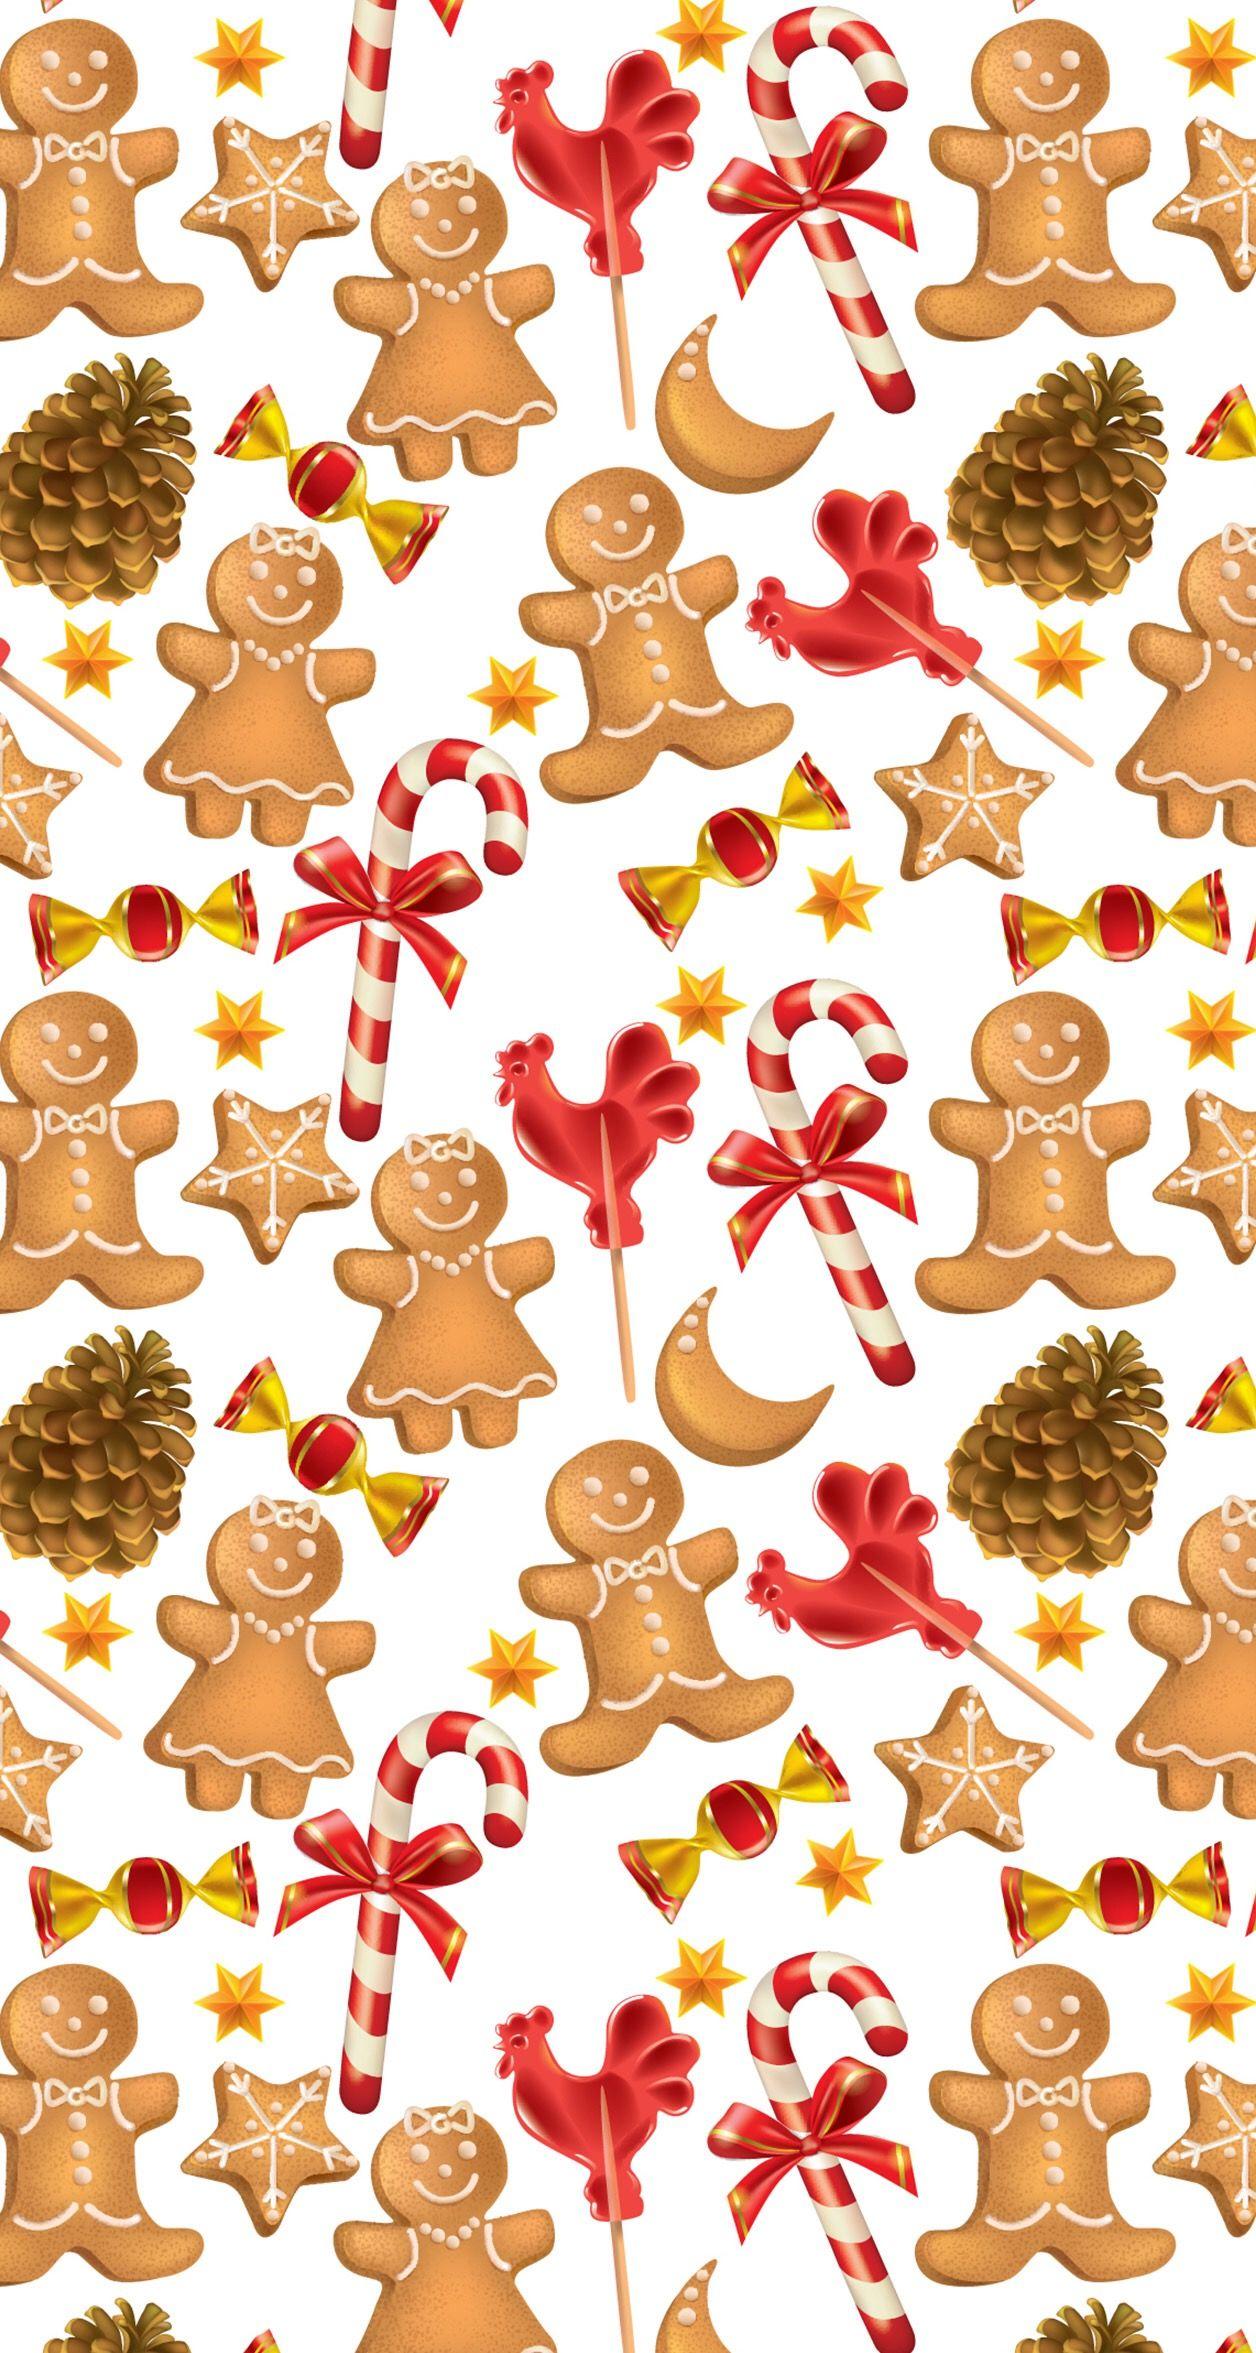 Gingerbread men christmas candy cane. Christmas wallpaper